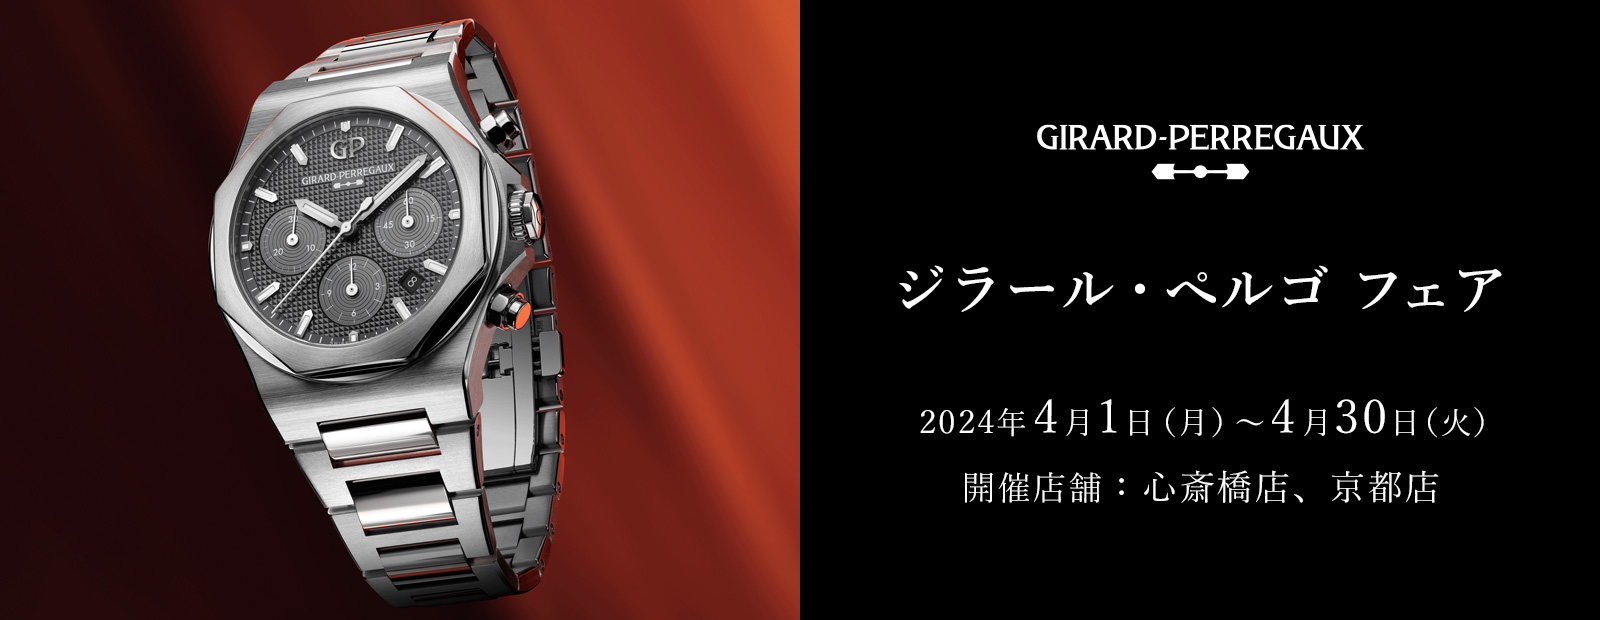 【GPフェア開催中】着け心地を考えられたスクエア時計 ジラールペルゴ「ヴィンテージ 1945 グレー 日本限定モデル」 - GIRARD-PERREGAUX 